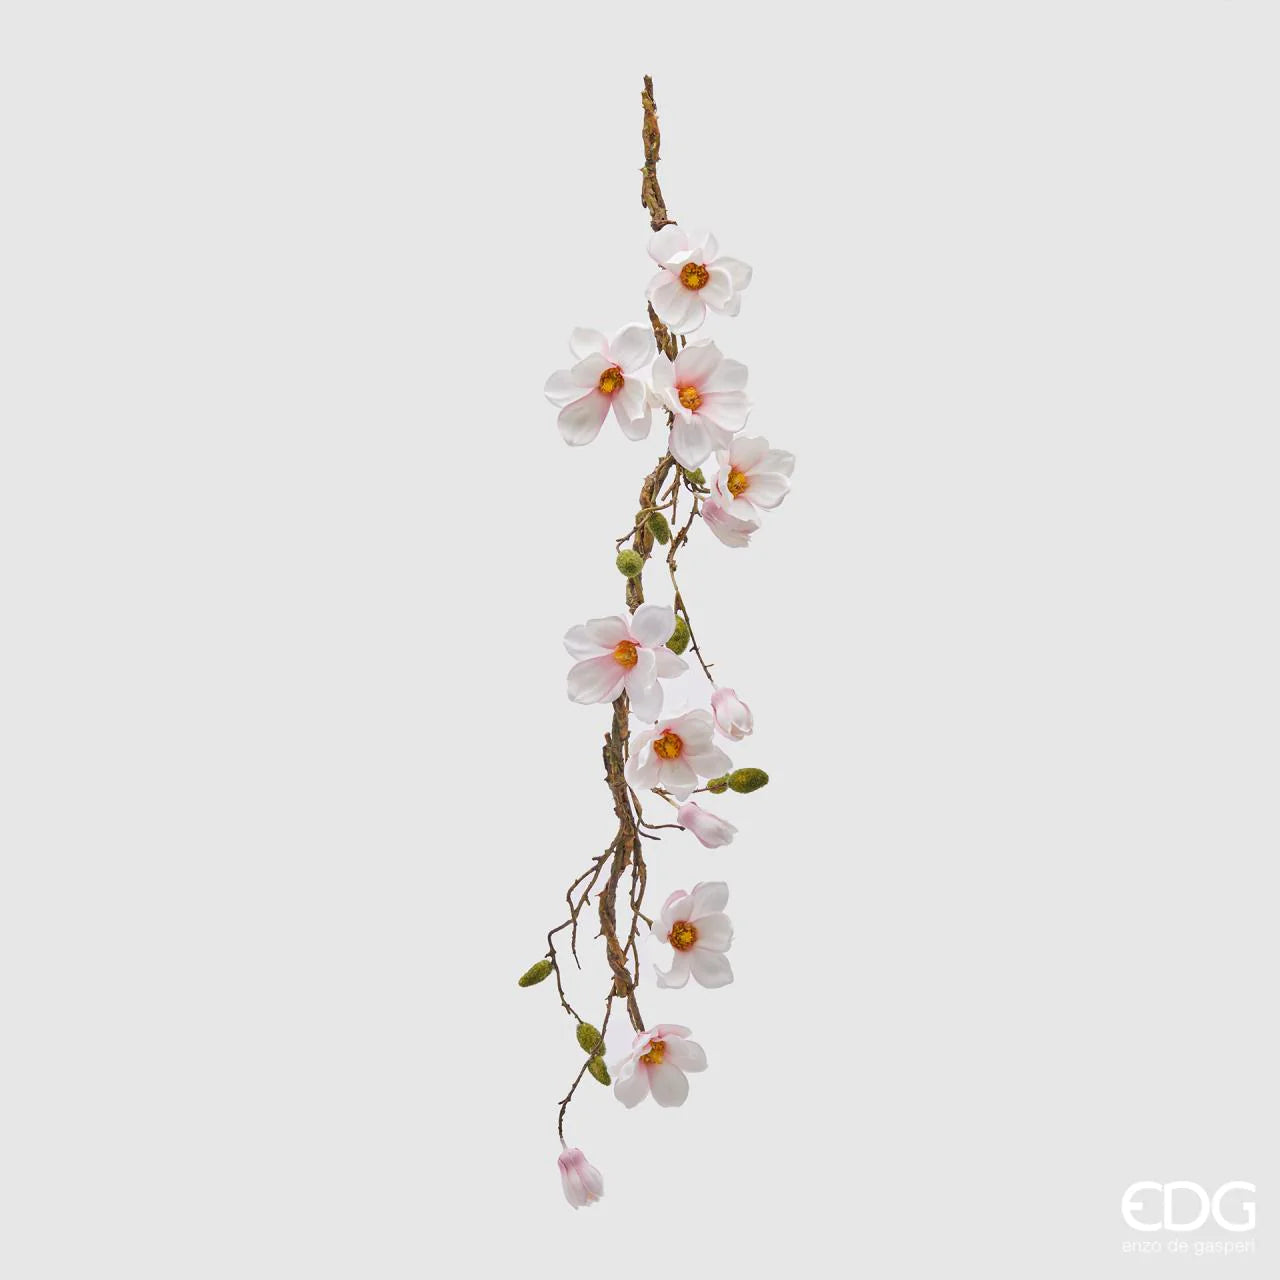 EDG - Magnolia artificiale Olis Tralcio